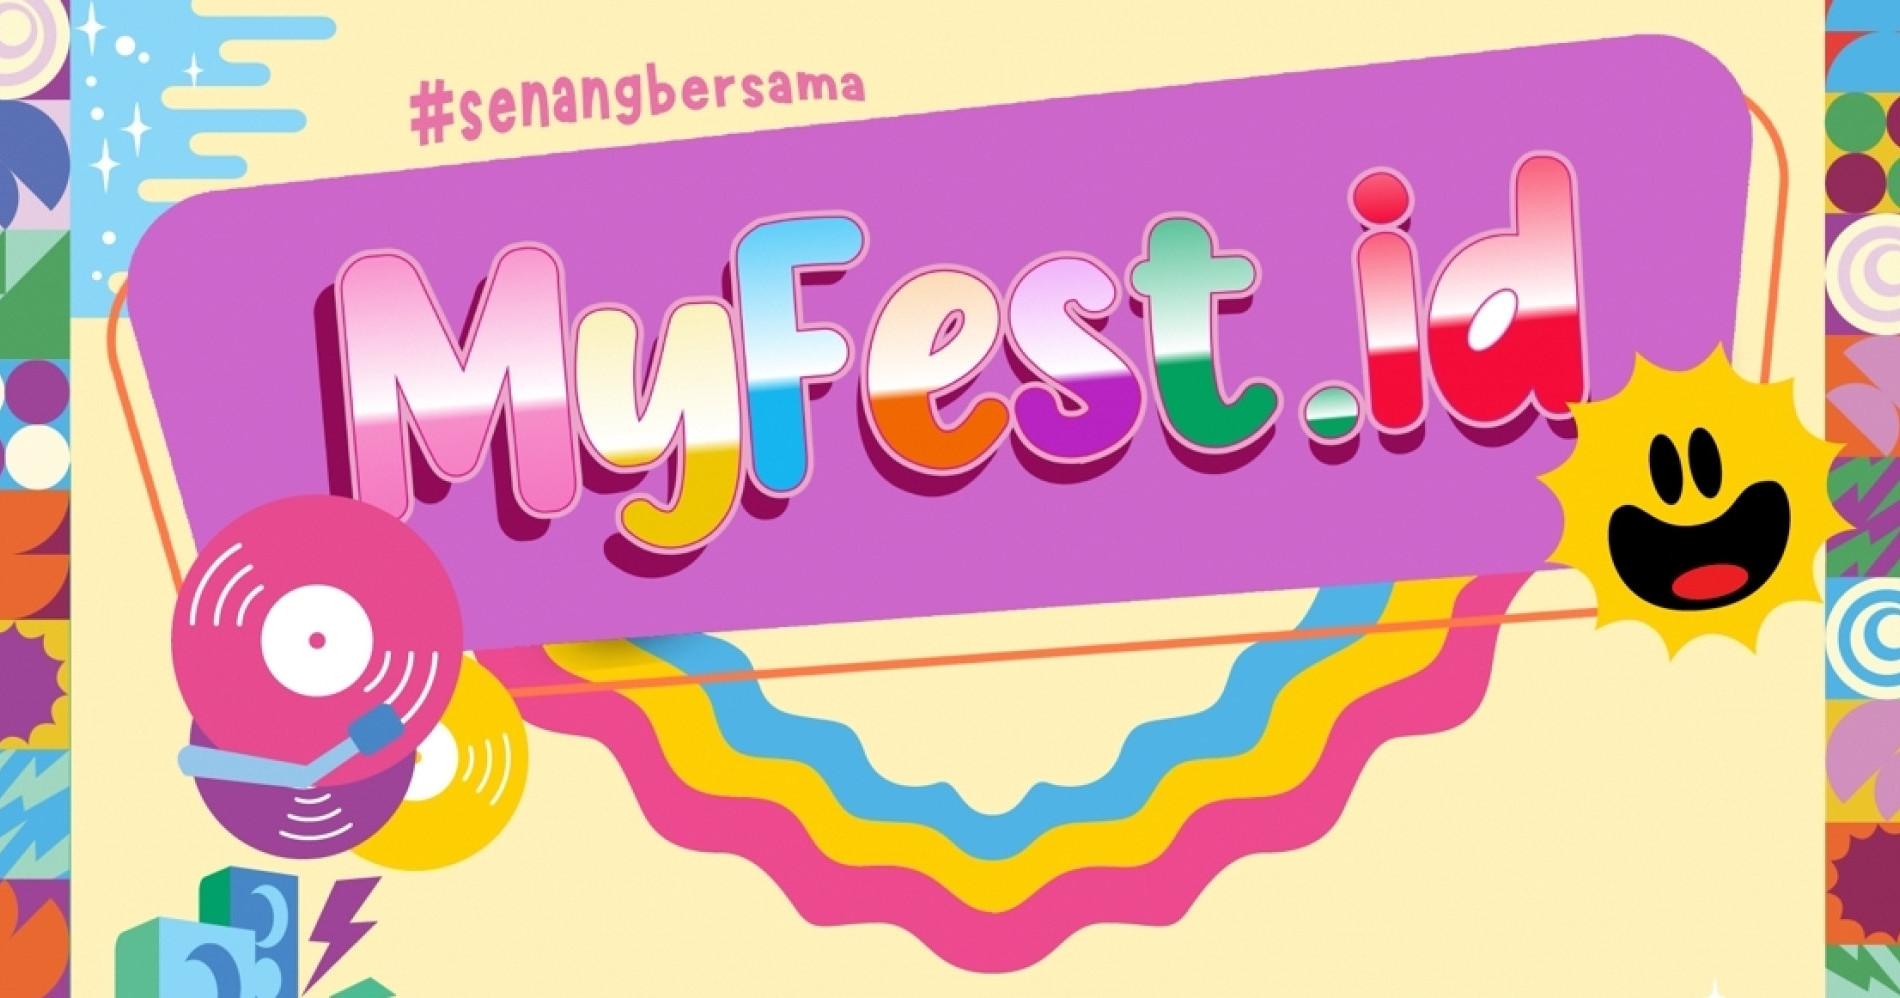 festival musik myfest.id